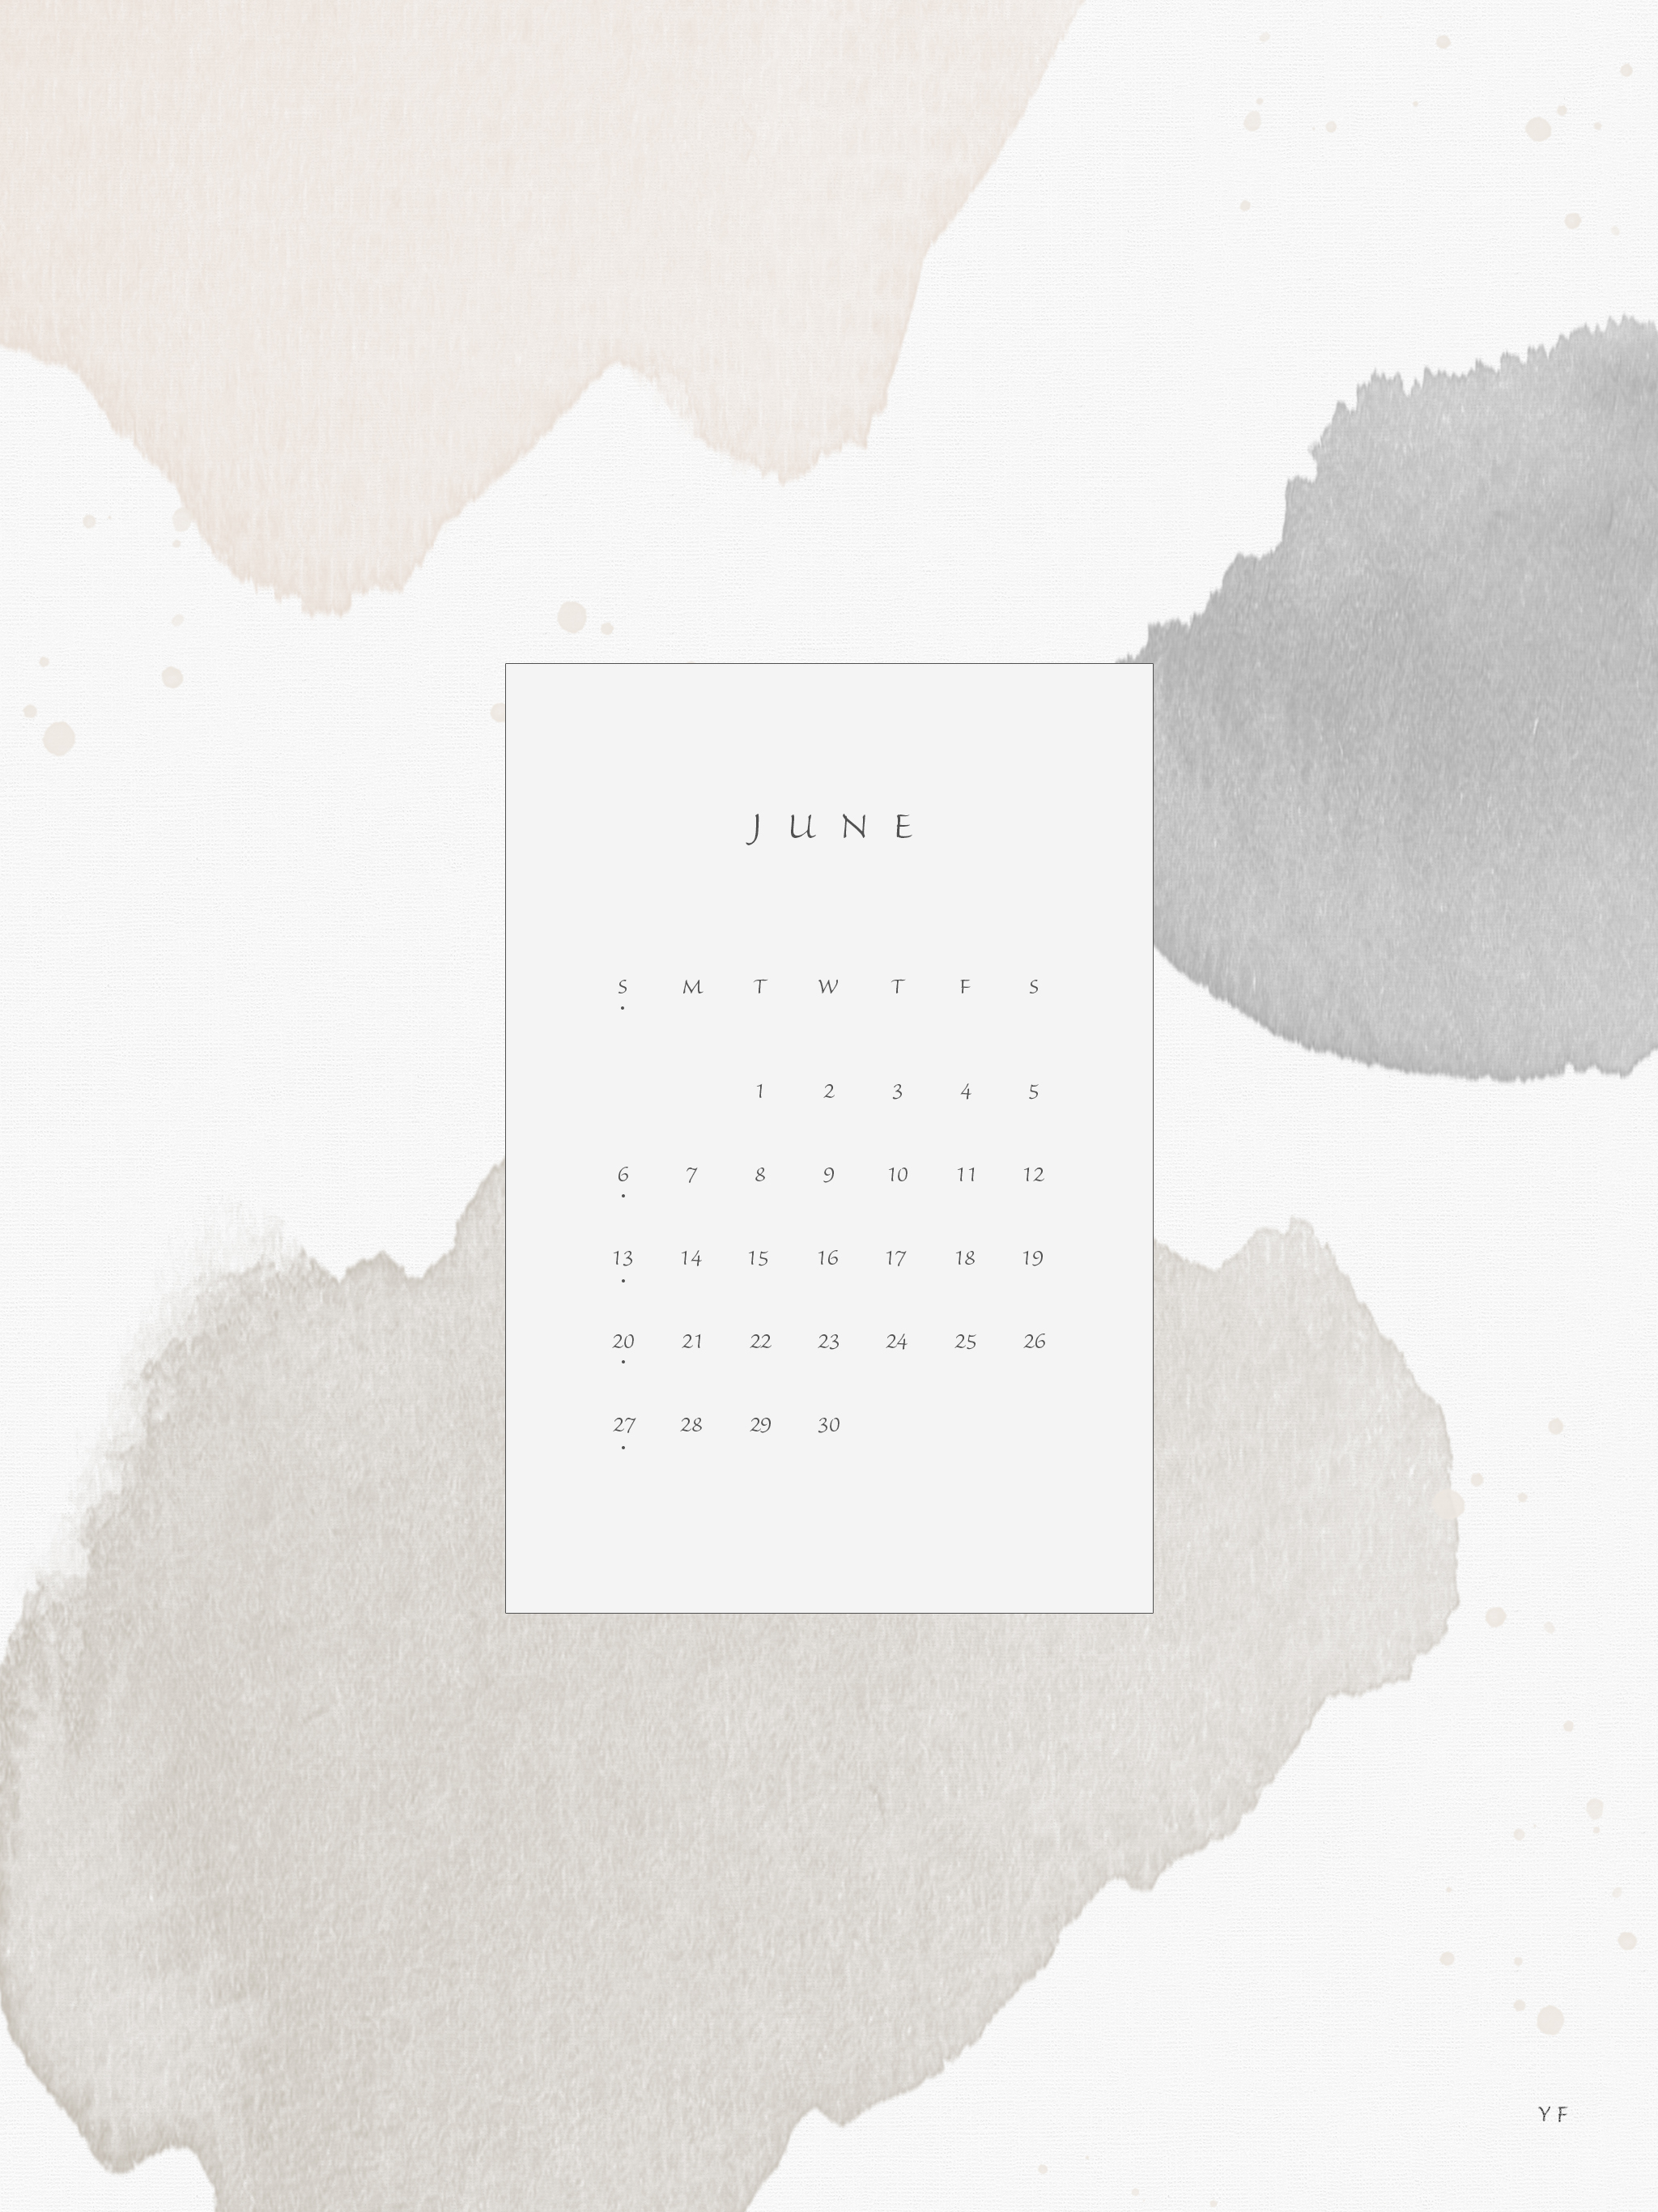 June 21 Calendar Wallpaper For The Ipad Design By Yf